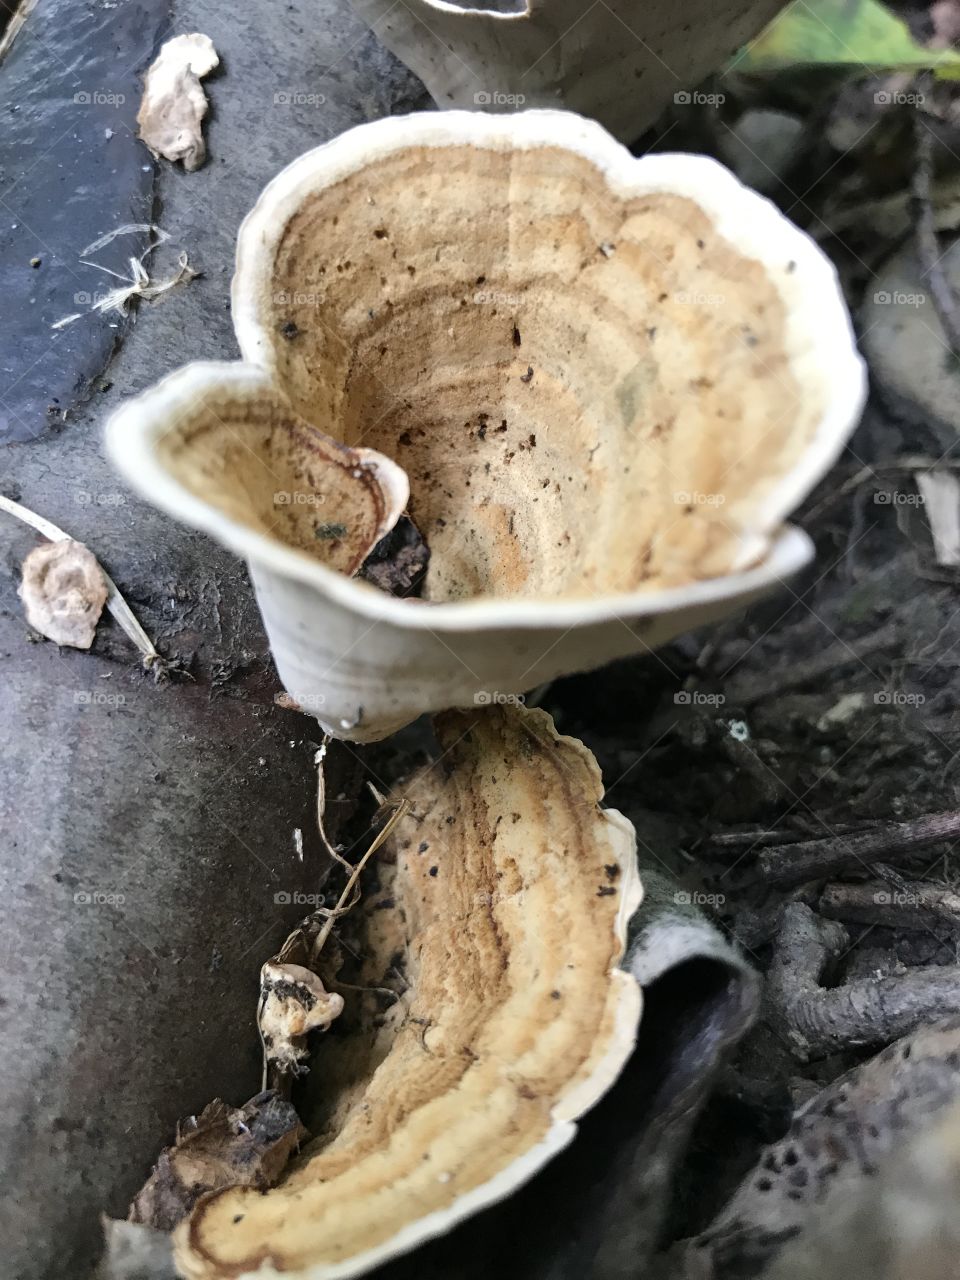 Cone shaped fungus. 